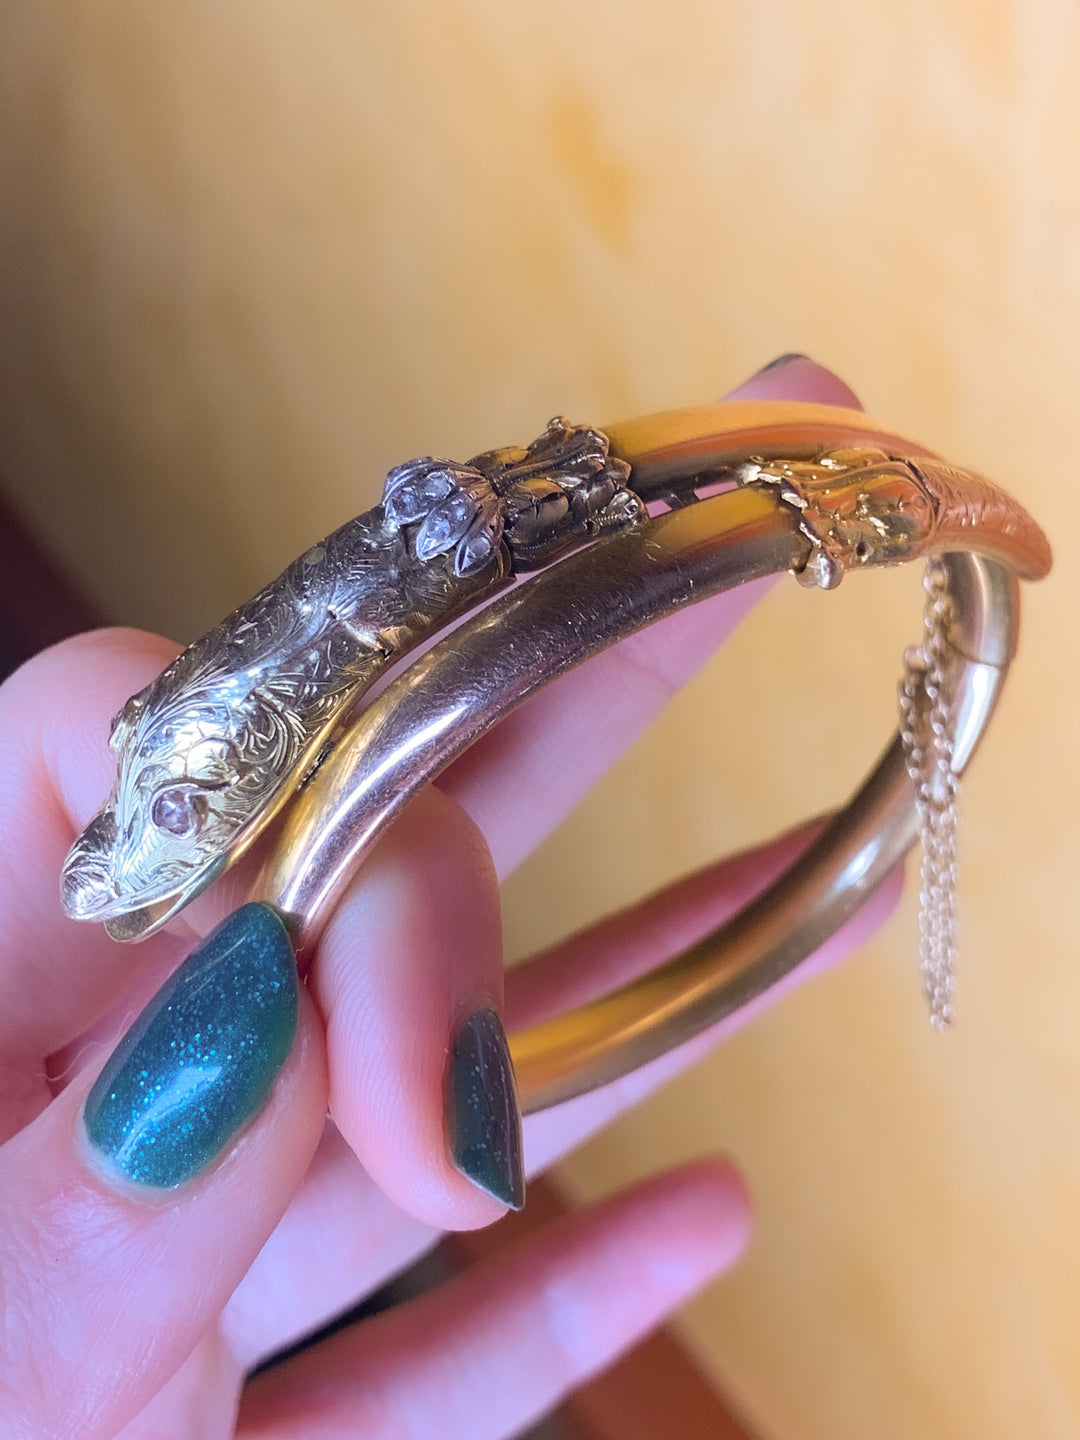 Remarkable 18k French Snake Bracelet with Rose-Cut Diamond Eyes *include birthday gift for Erin*